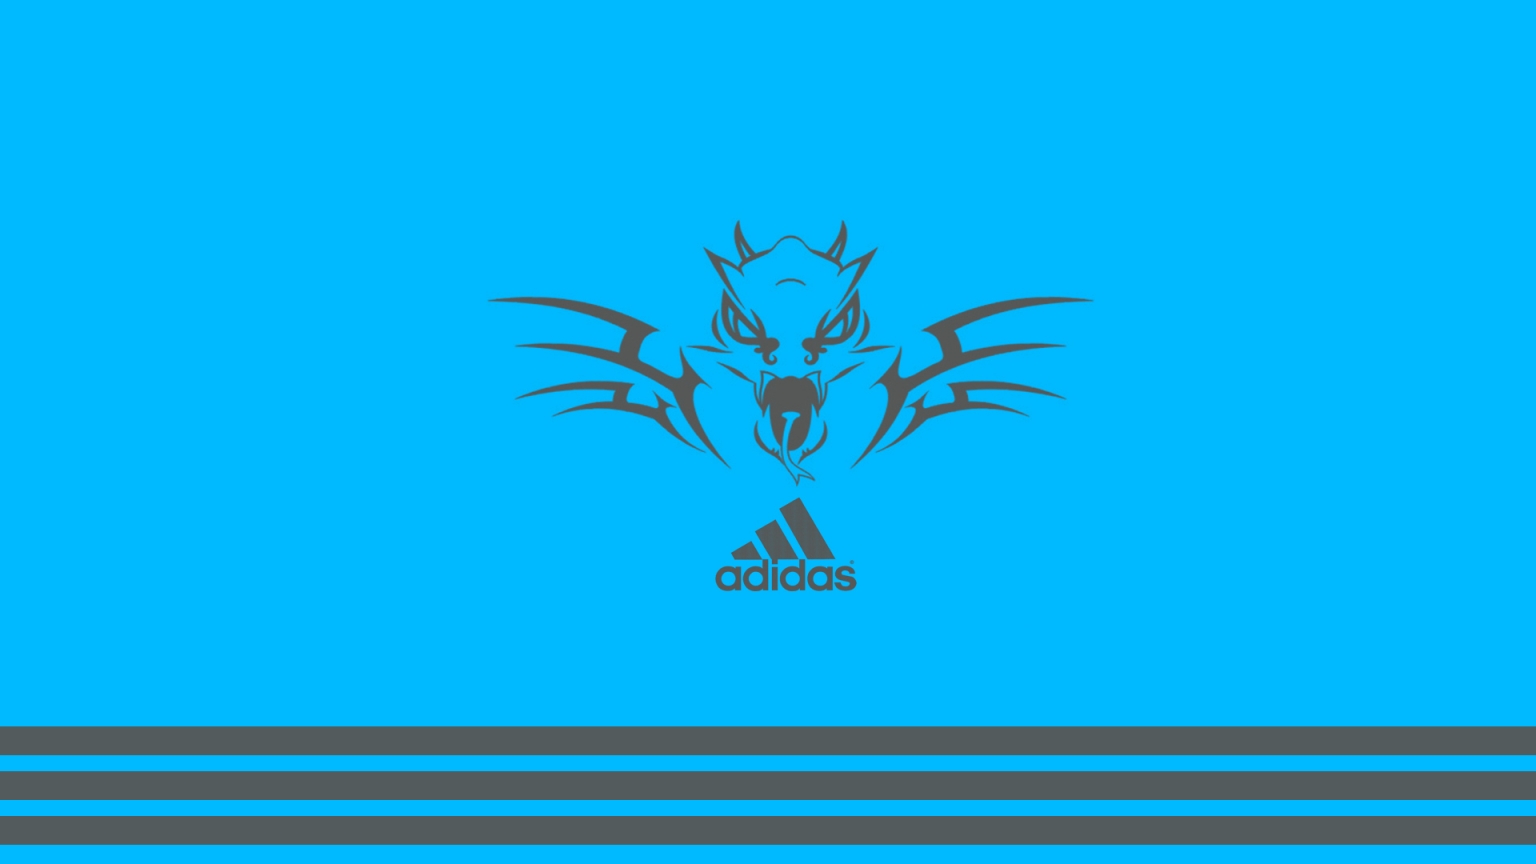 Adidas Fantasy Logo for 1536 x 864 HDTV resolution